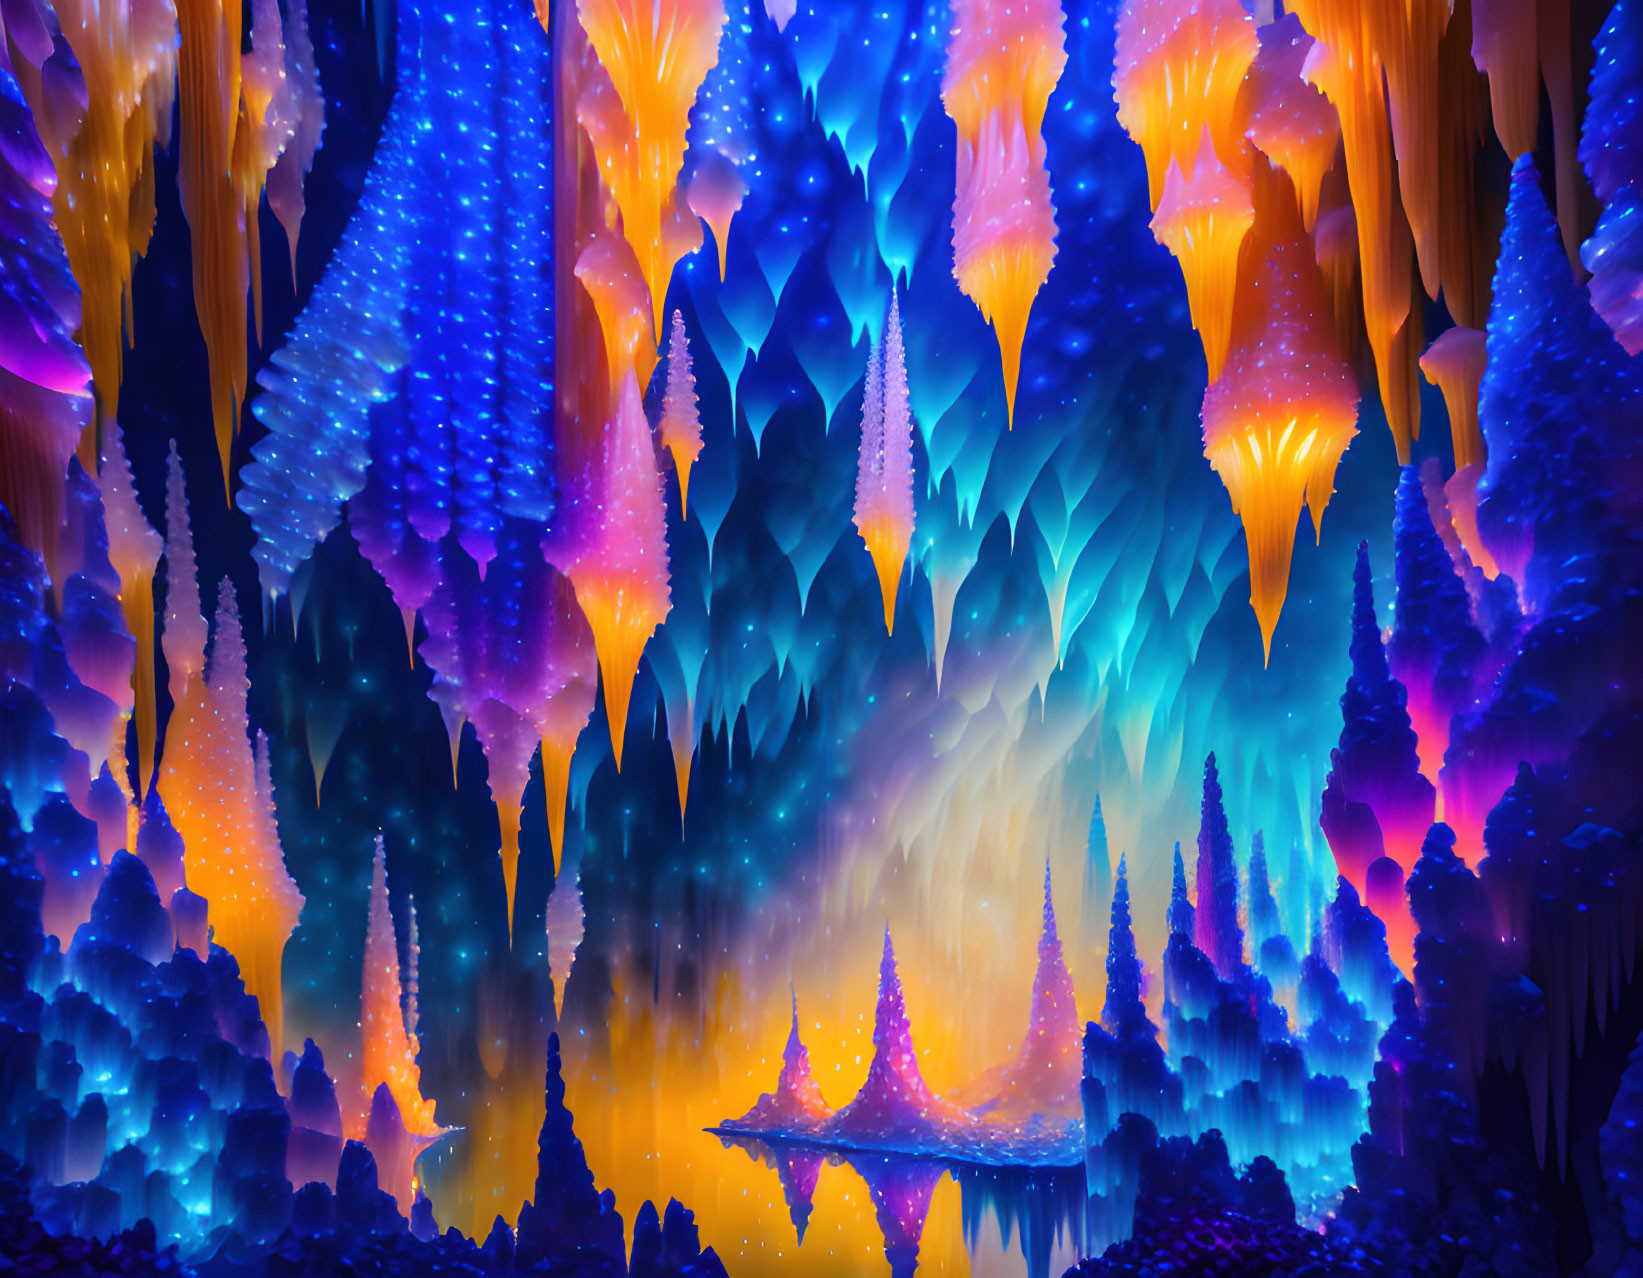 Crystal Caves II